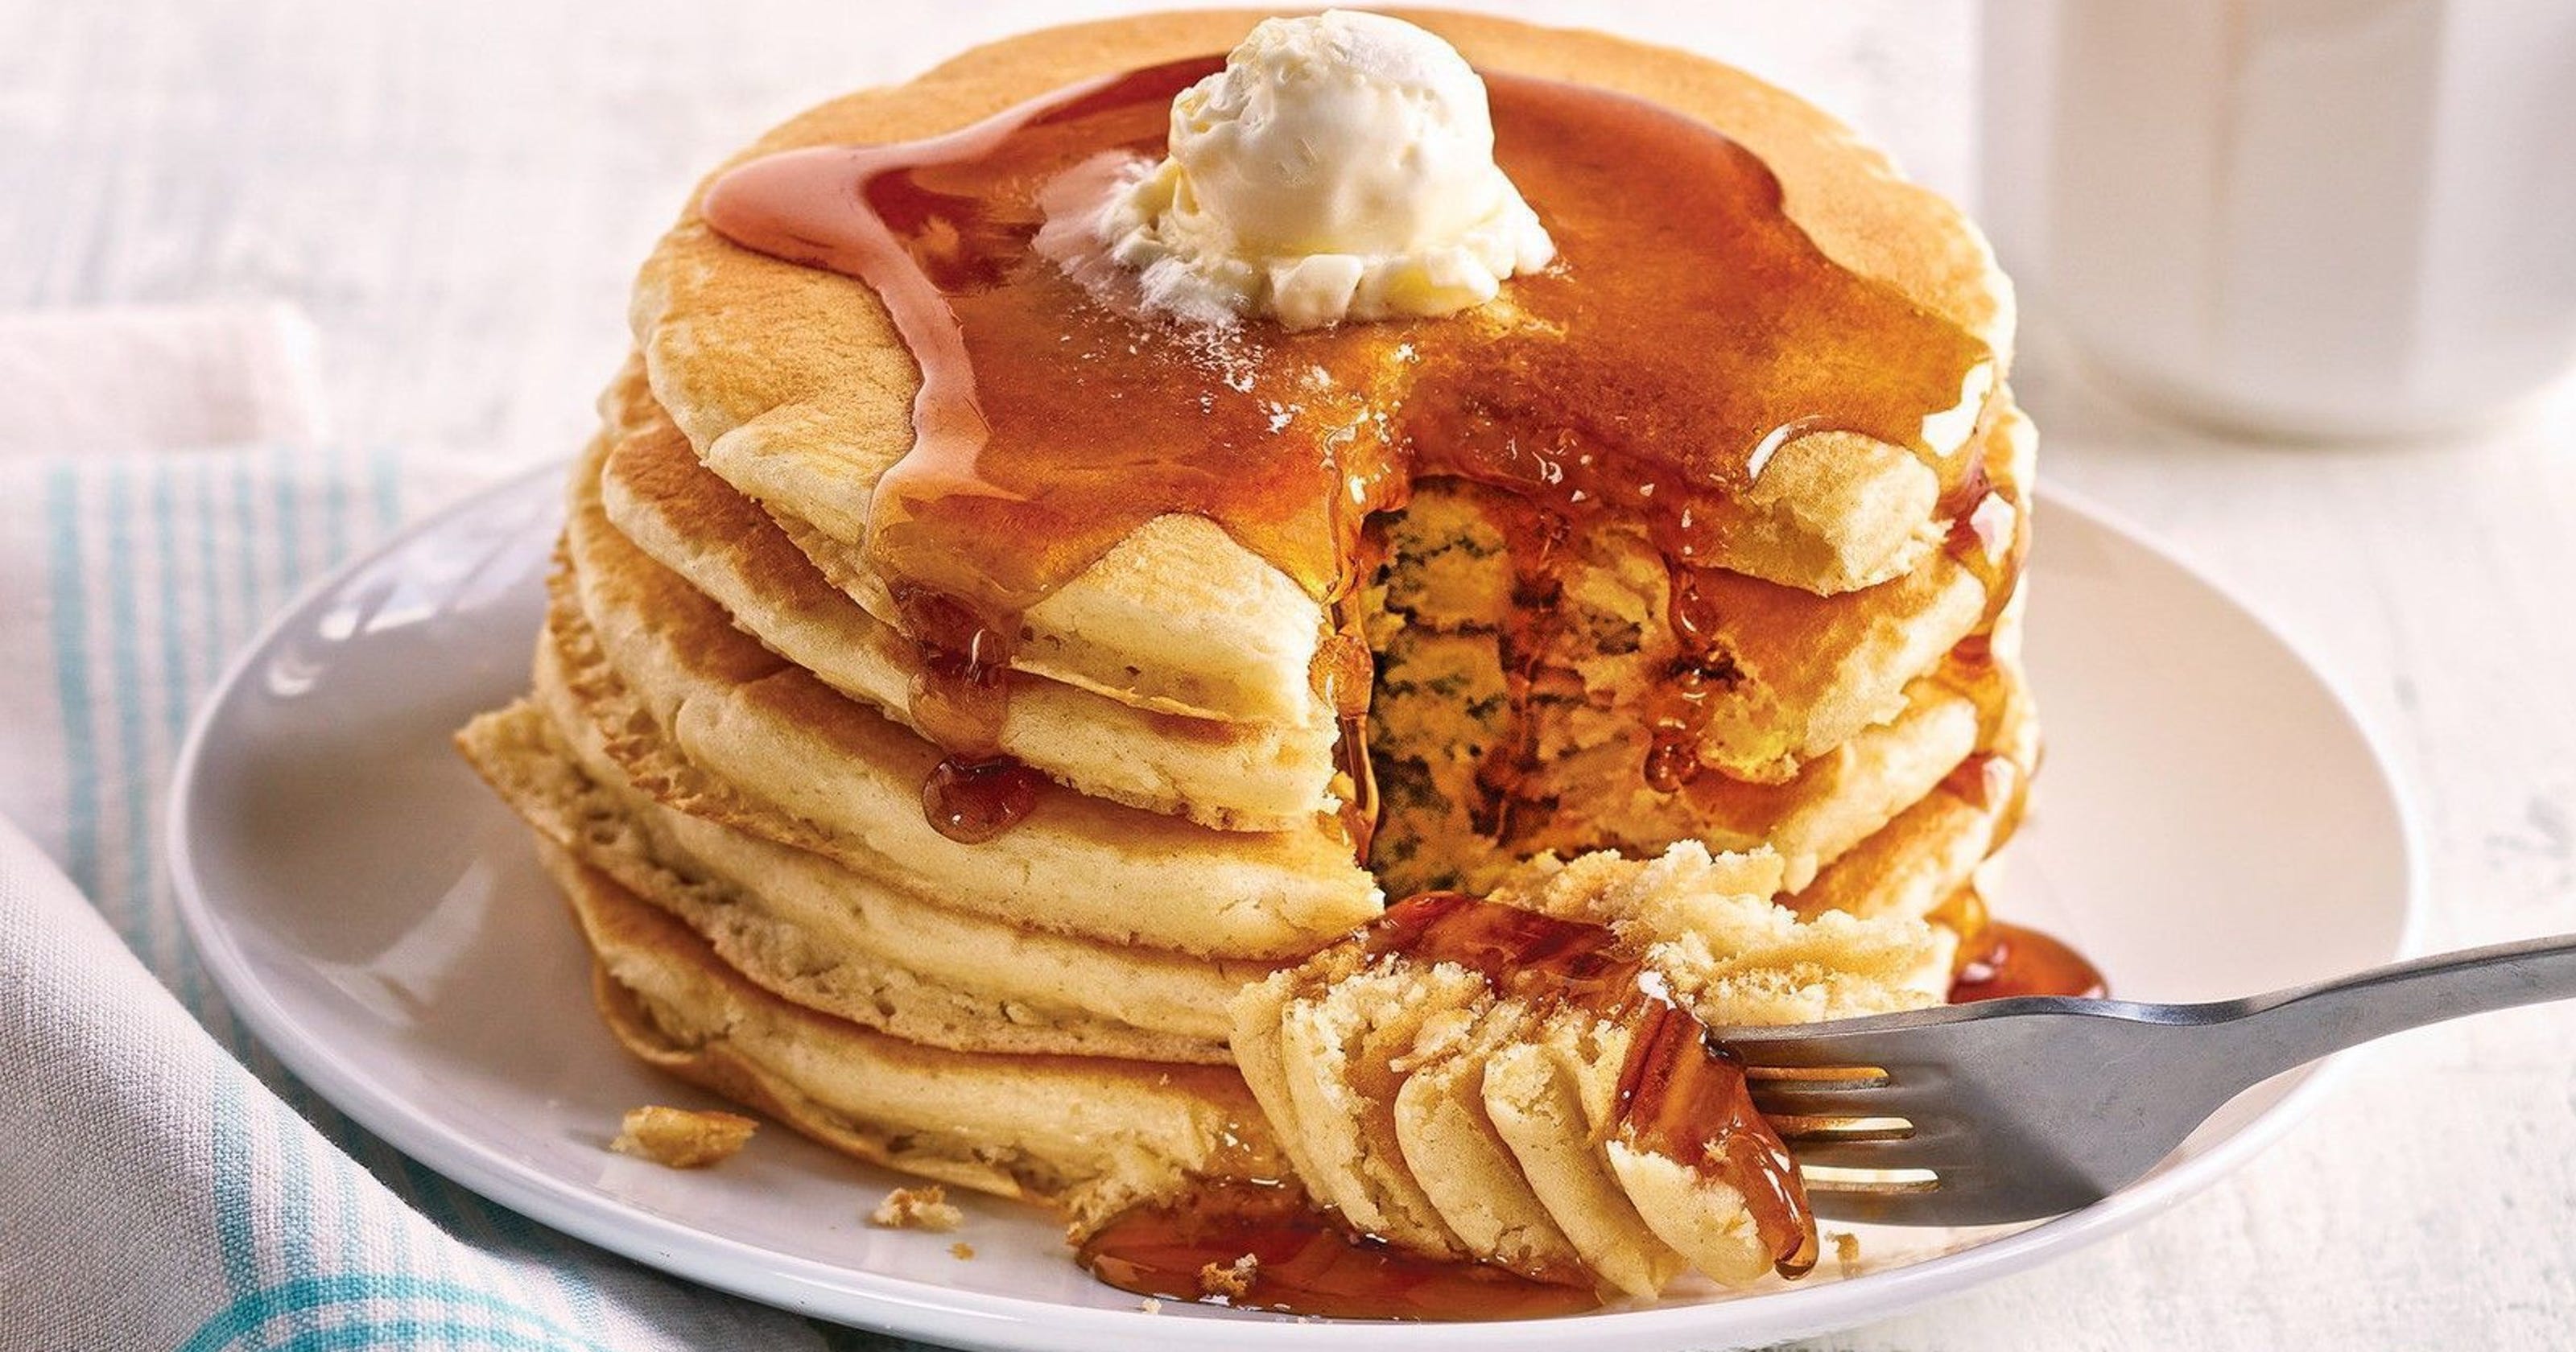 IHOP celebrates its National Pancake Day with free short stacks Feb. 27